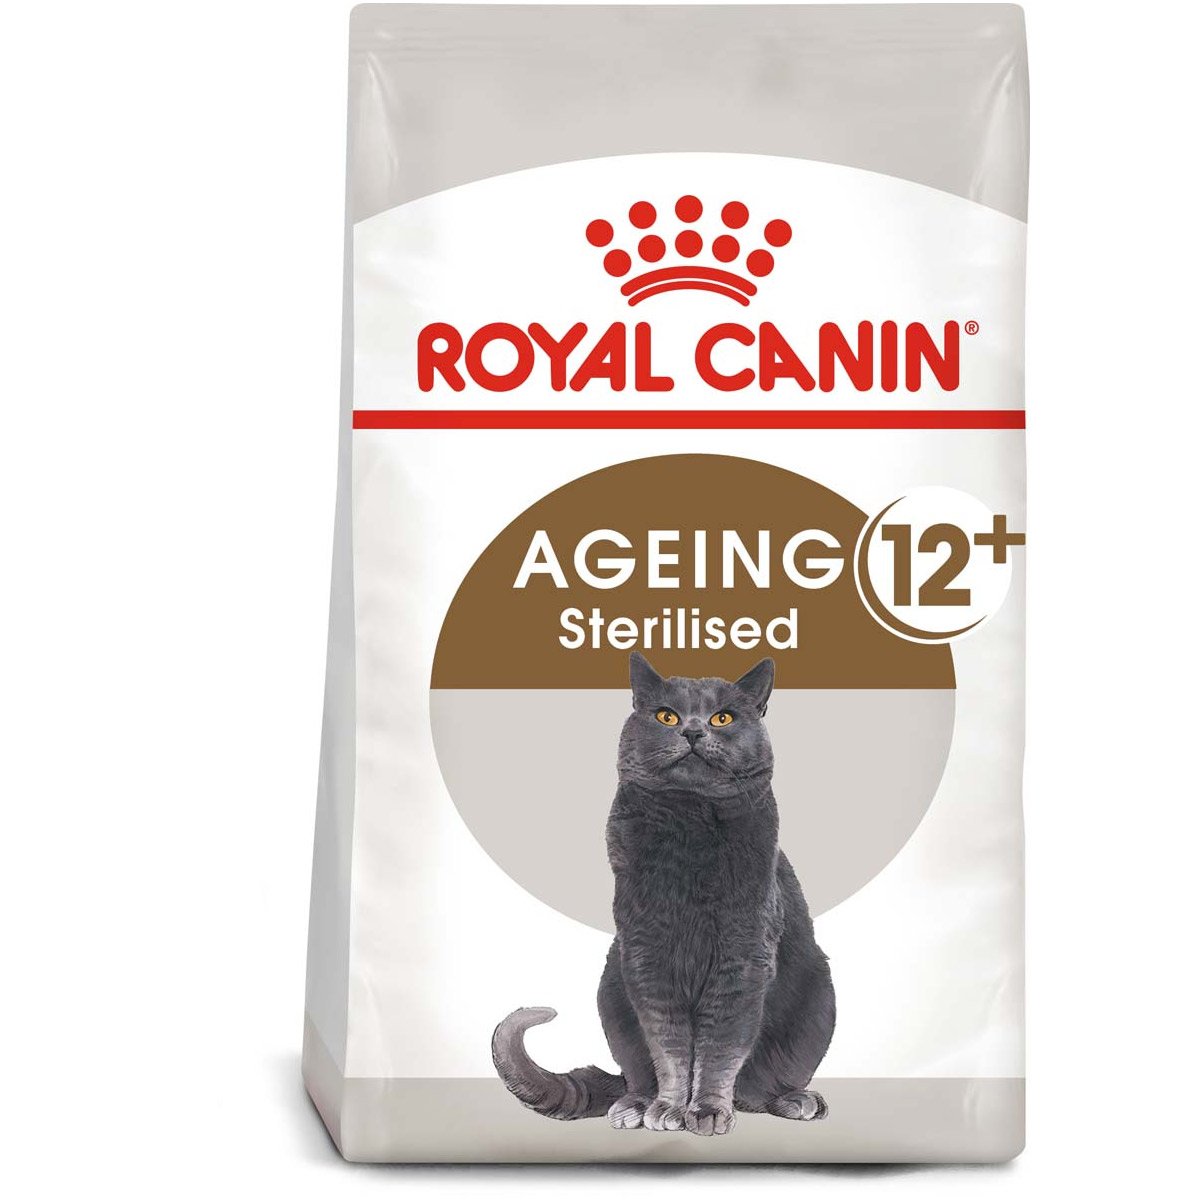 ROYAL CANIN AGEING 12+ Sterilised Trockenfutter für ältere kastrierte Katzen 2kg von Royal Canin